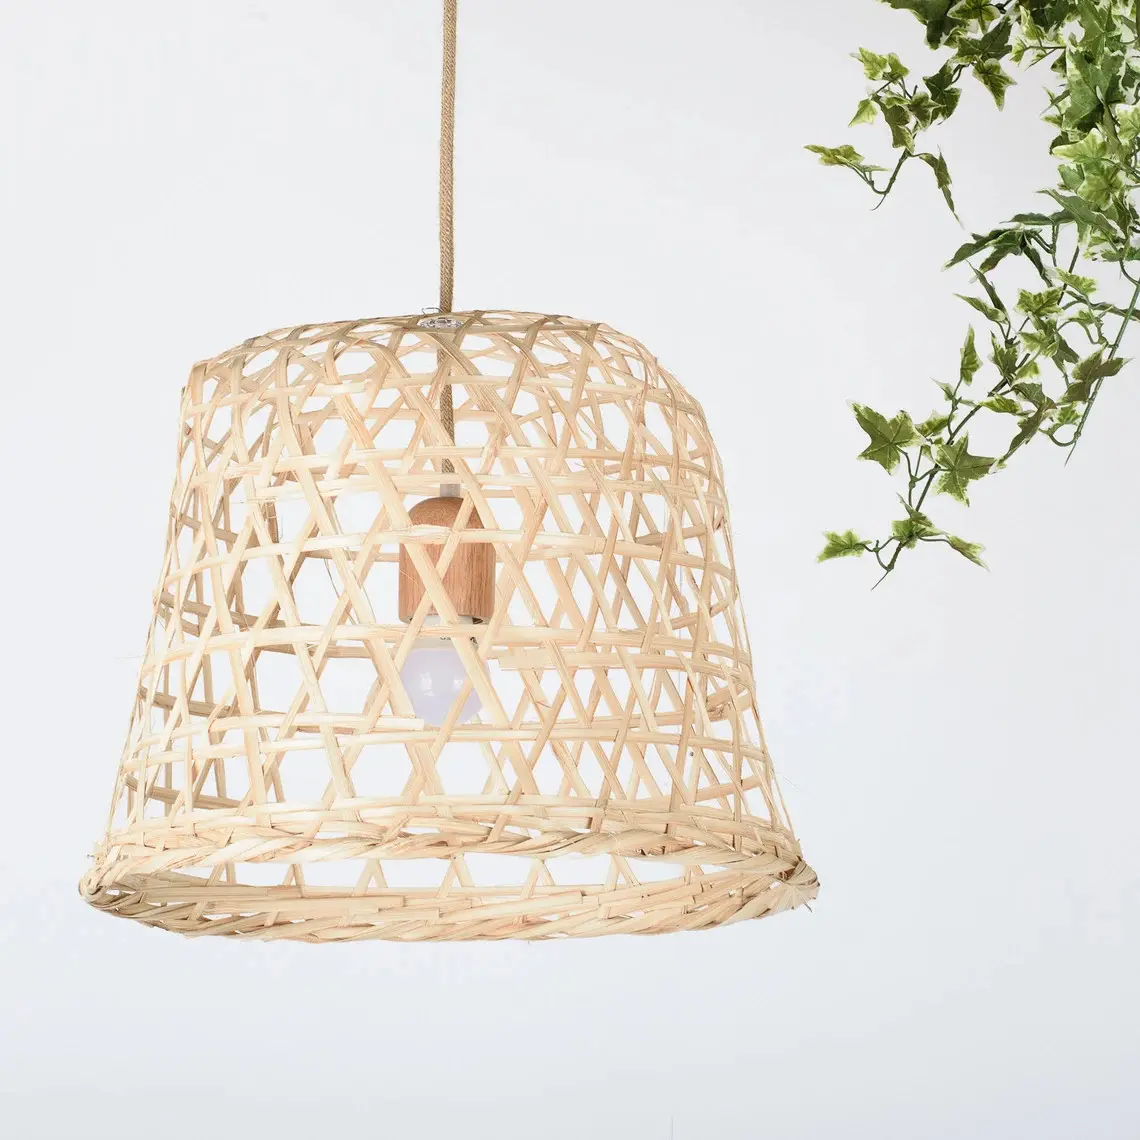 Manufacturer Vietnamese handmade bamboo ceiling lamps rattan pendant lamp light new designs to export